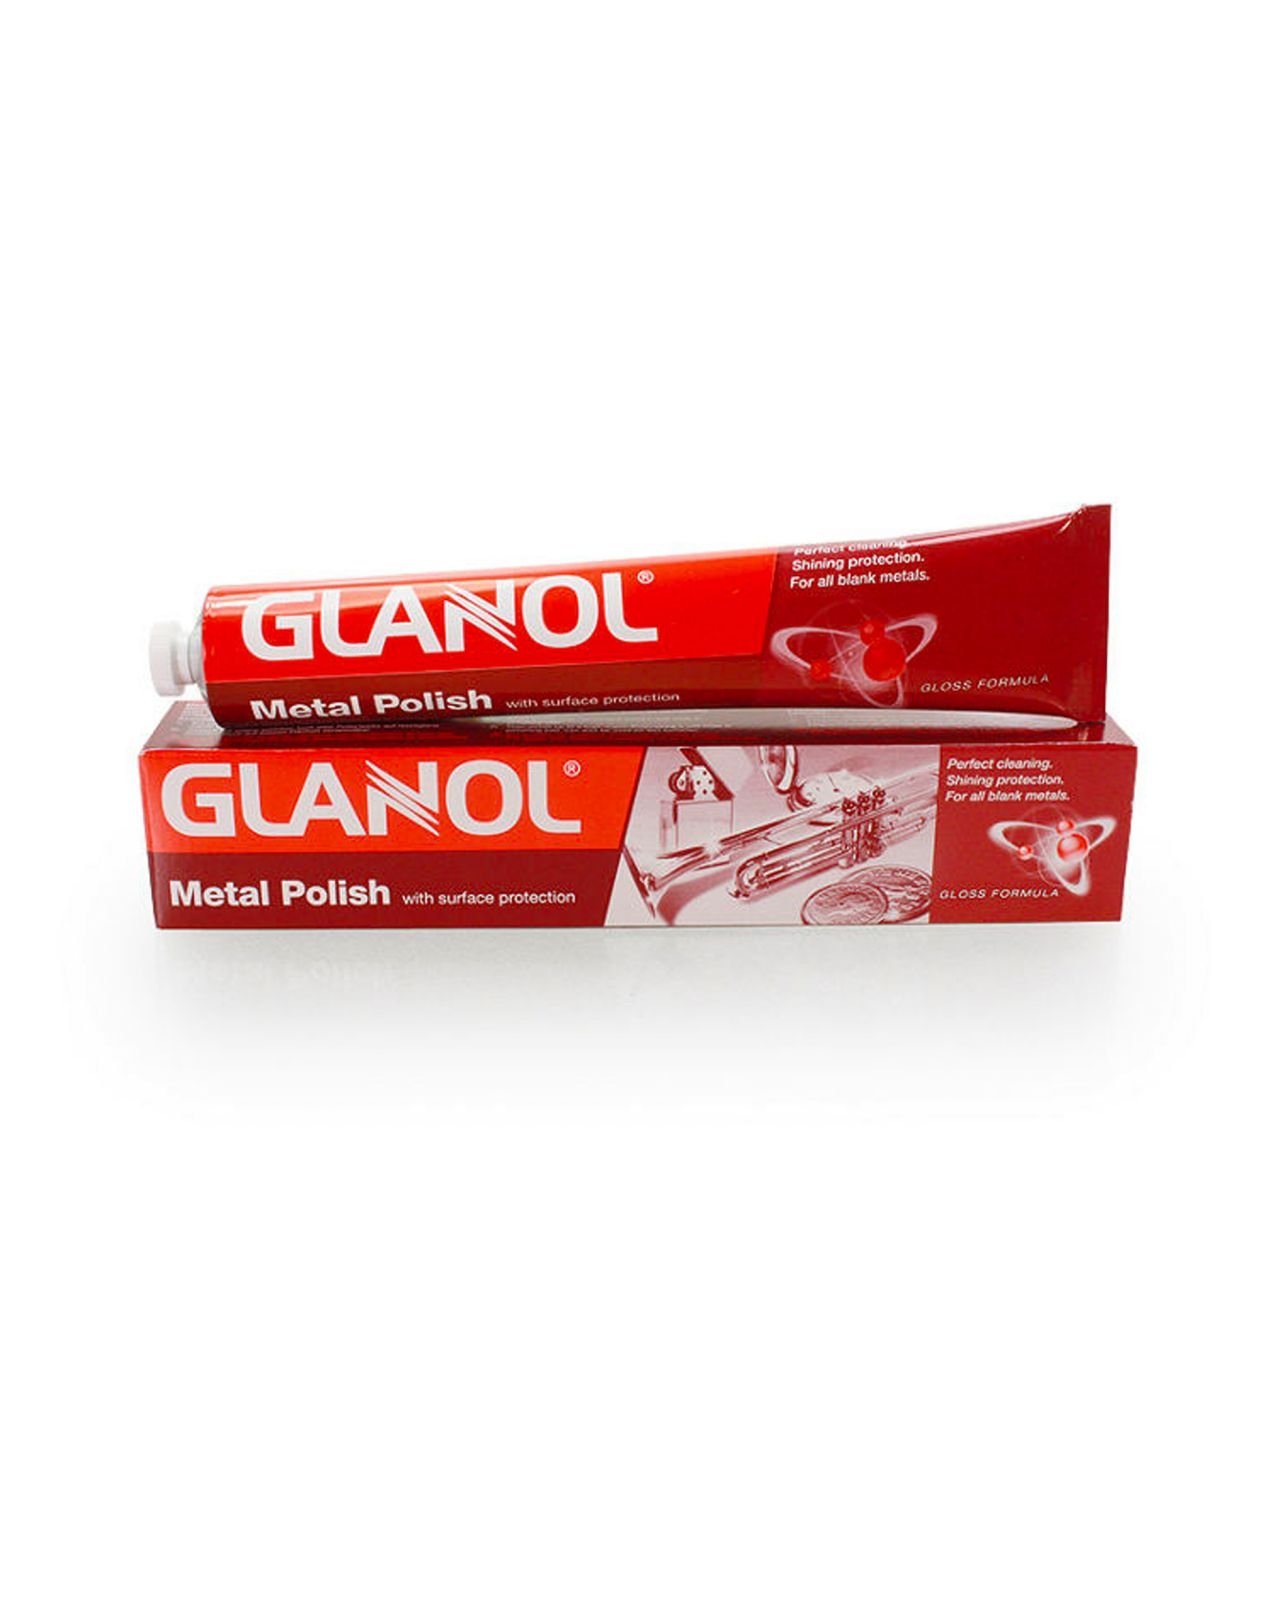 Glanol polish 100ml